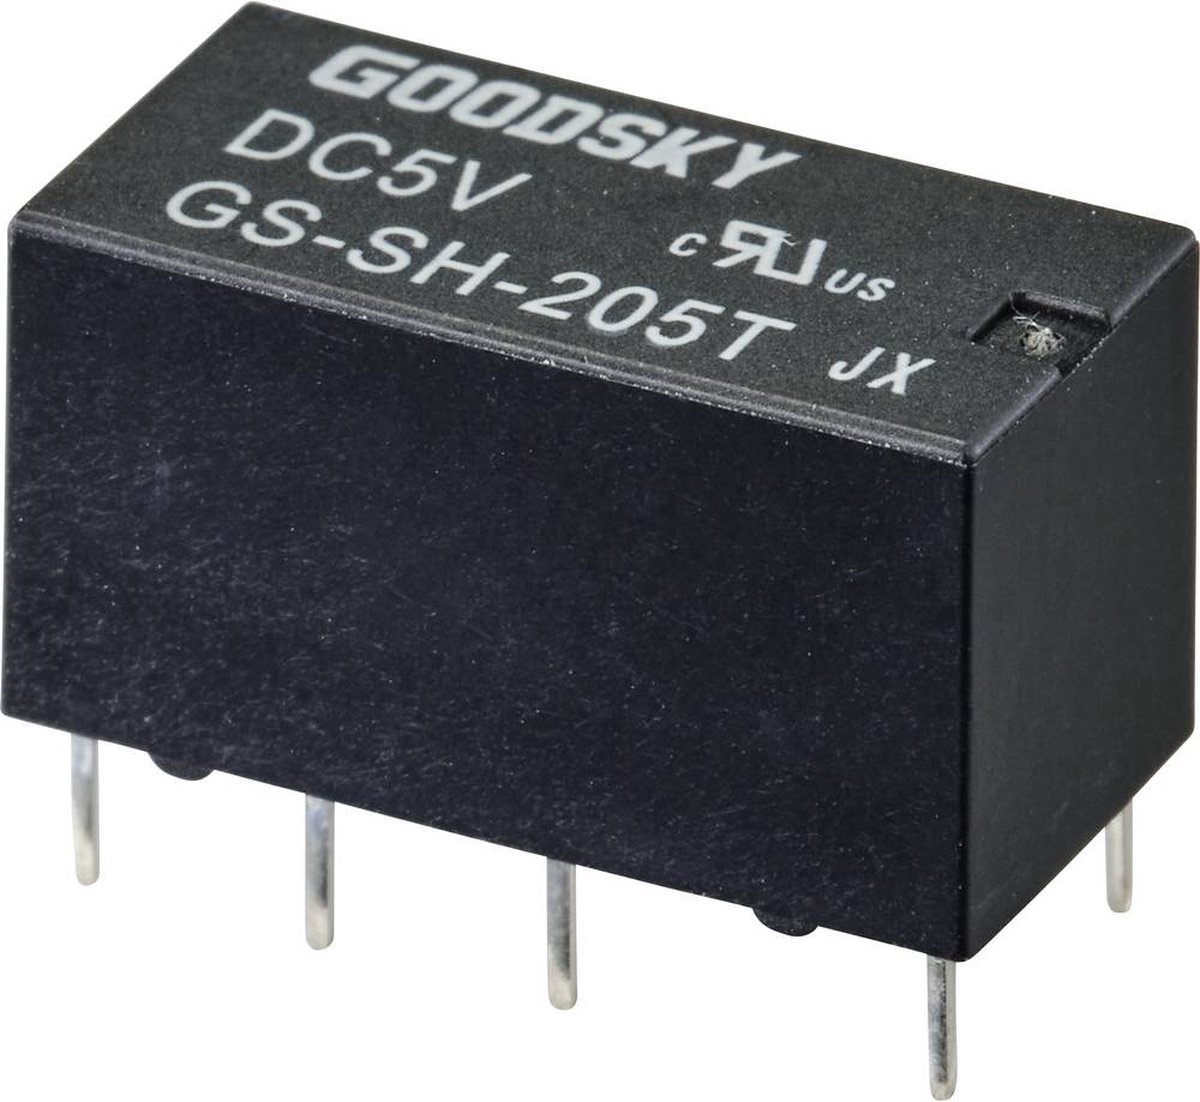 GoodSky GS-SH-205T Printrelais 5 V/DC 2 A 2x wisselcontact 1 stuk(s) Tube